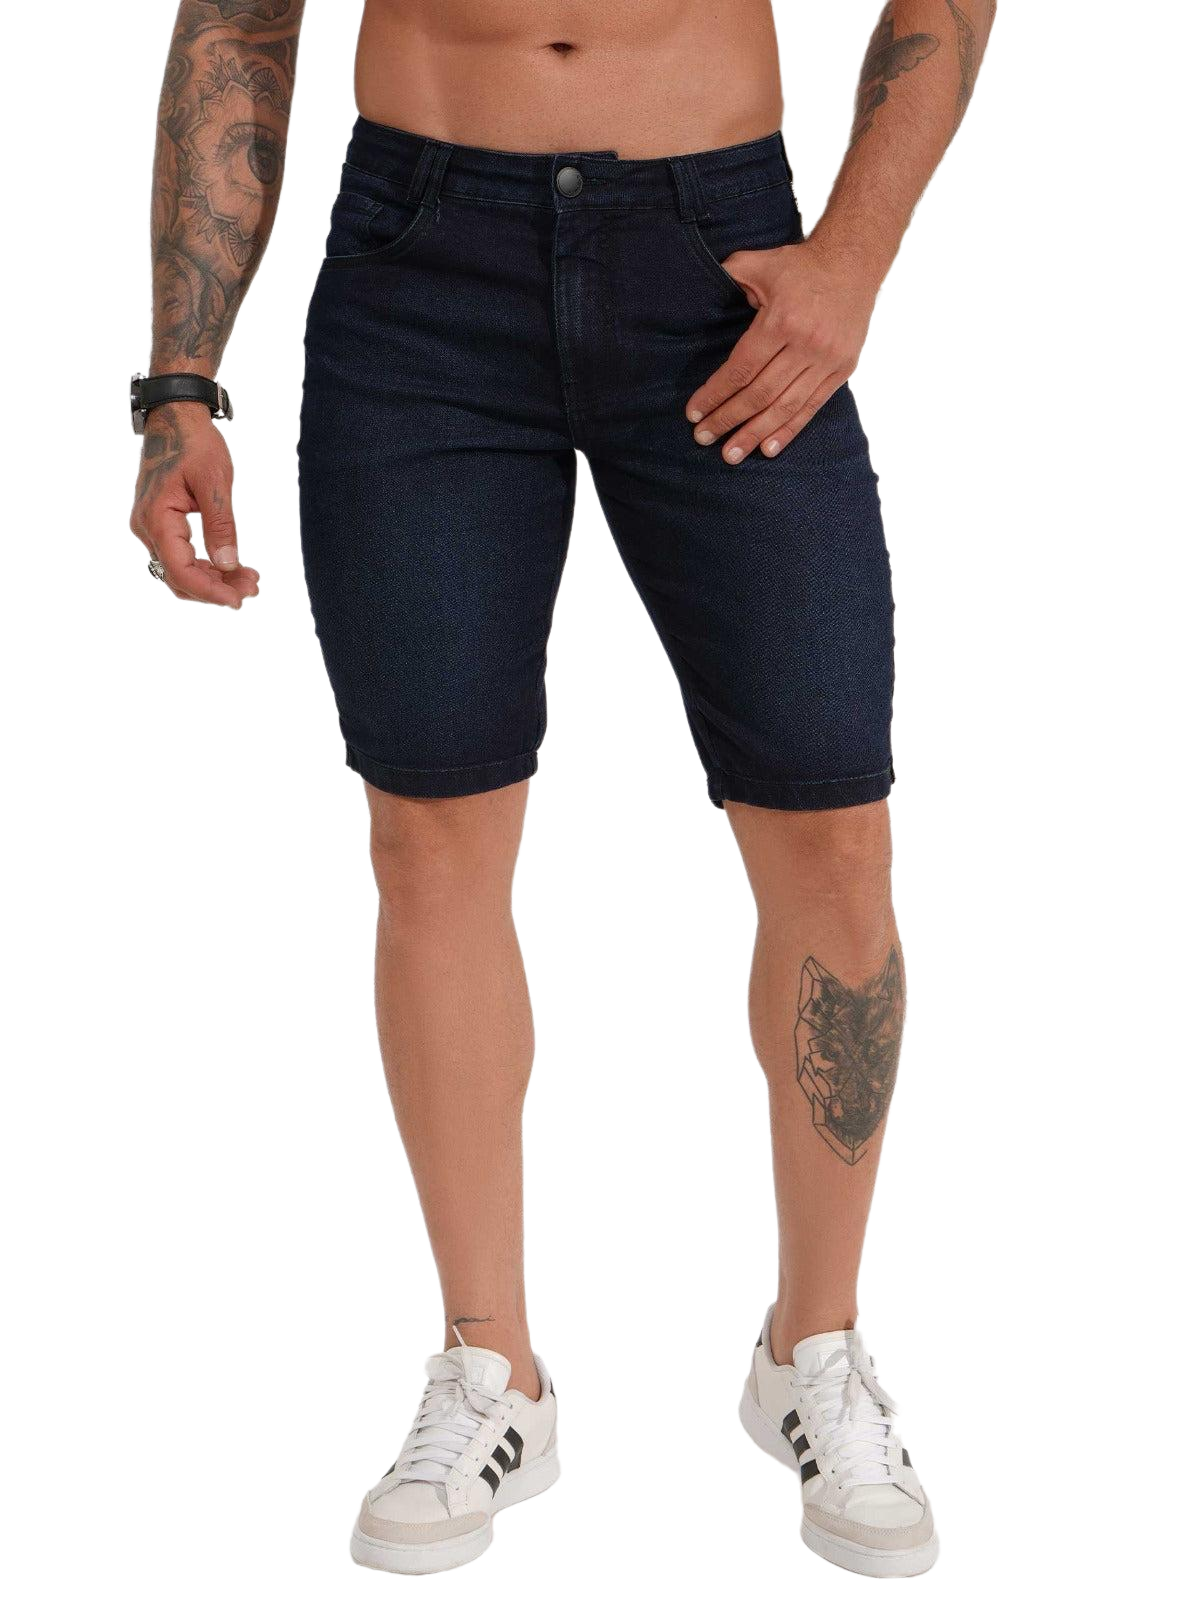 Pit Bull Jeans Men's Jeans Shorts 63046